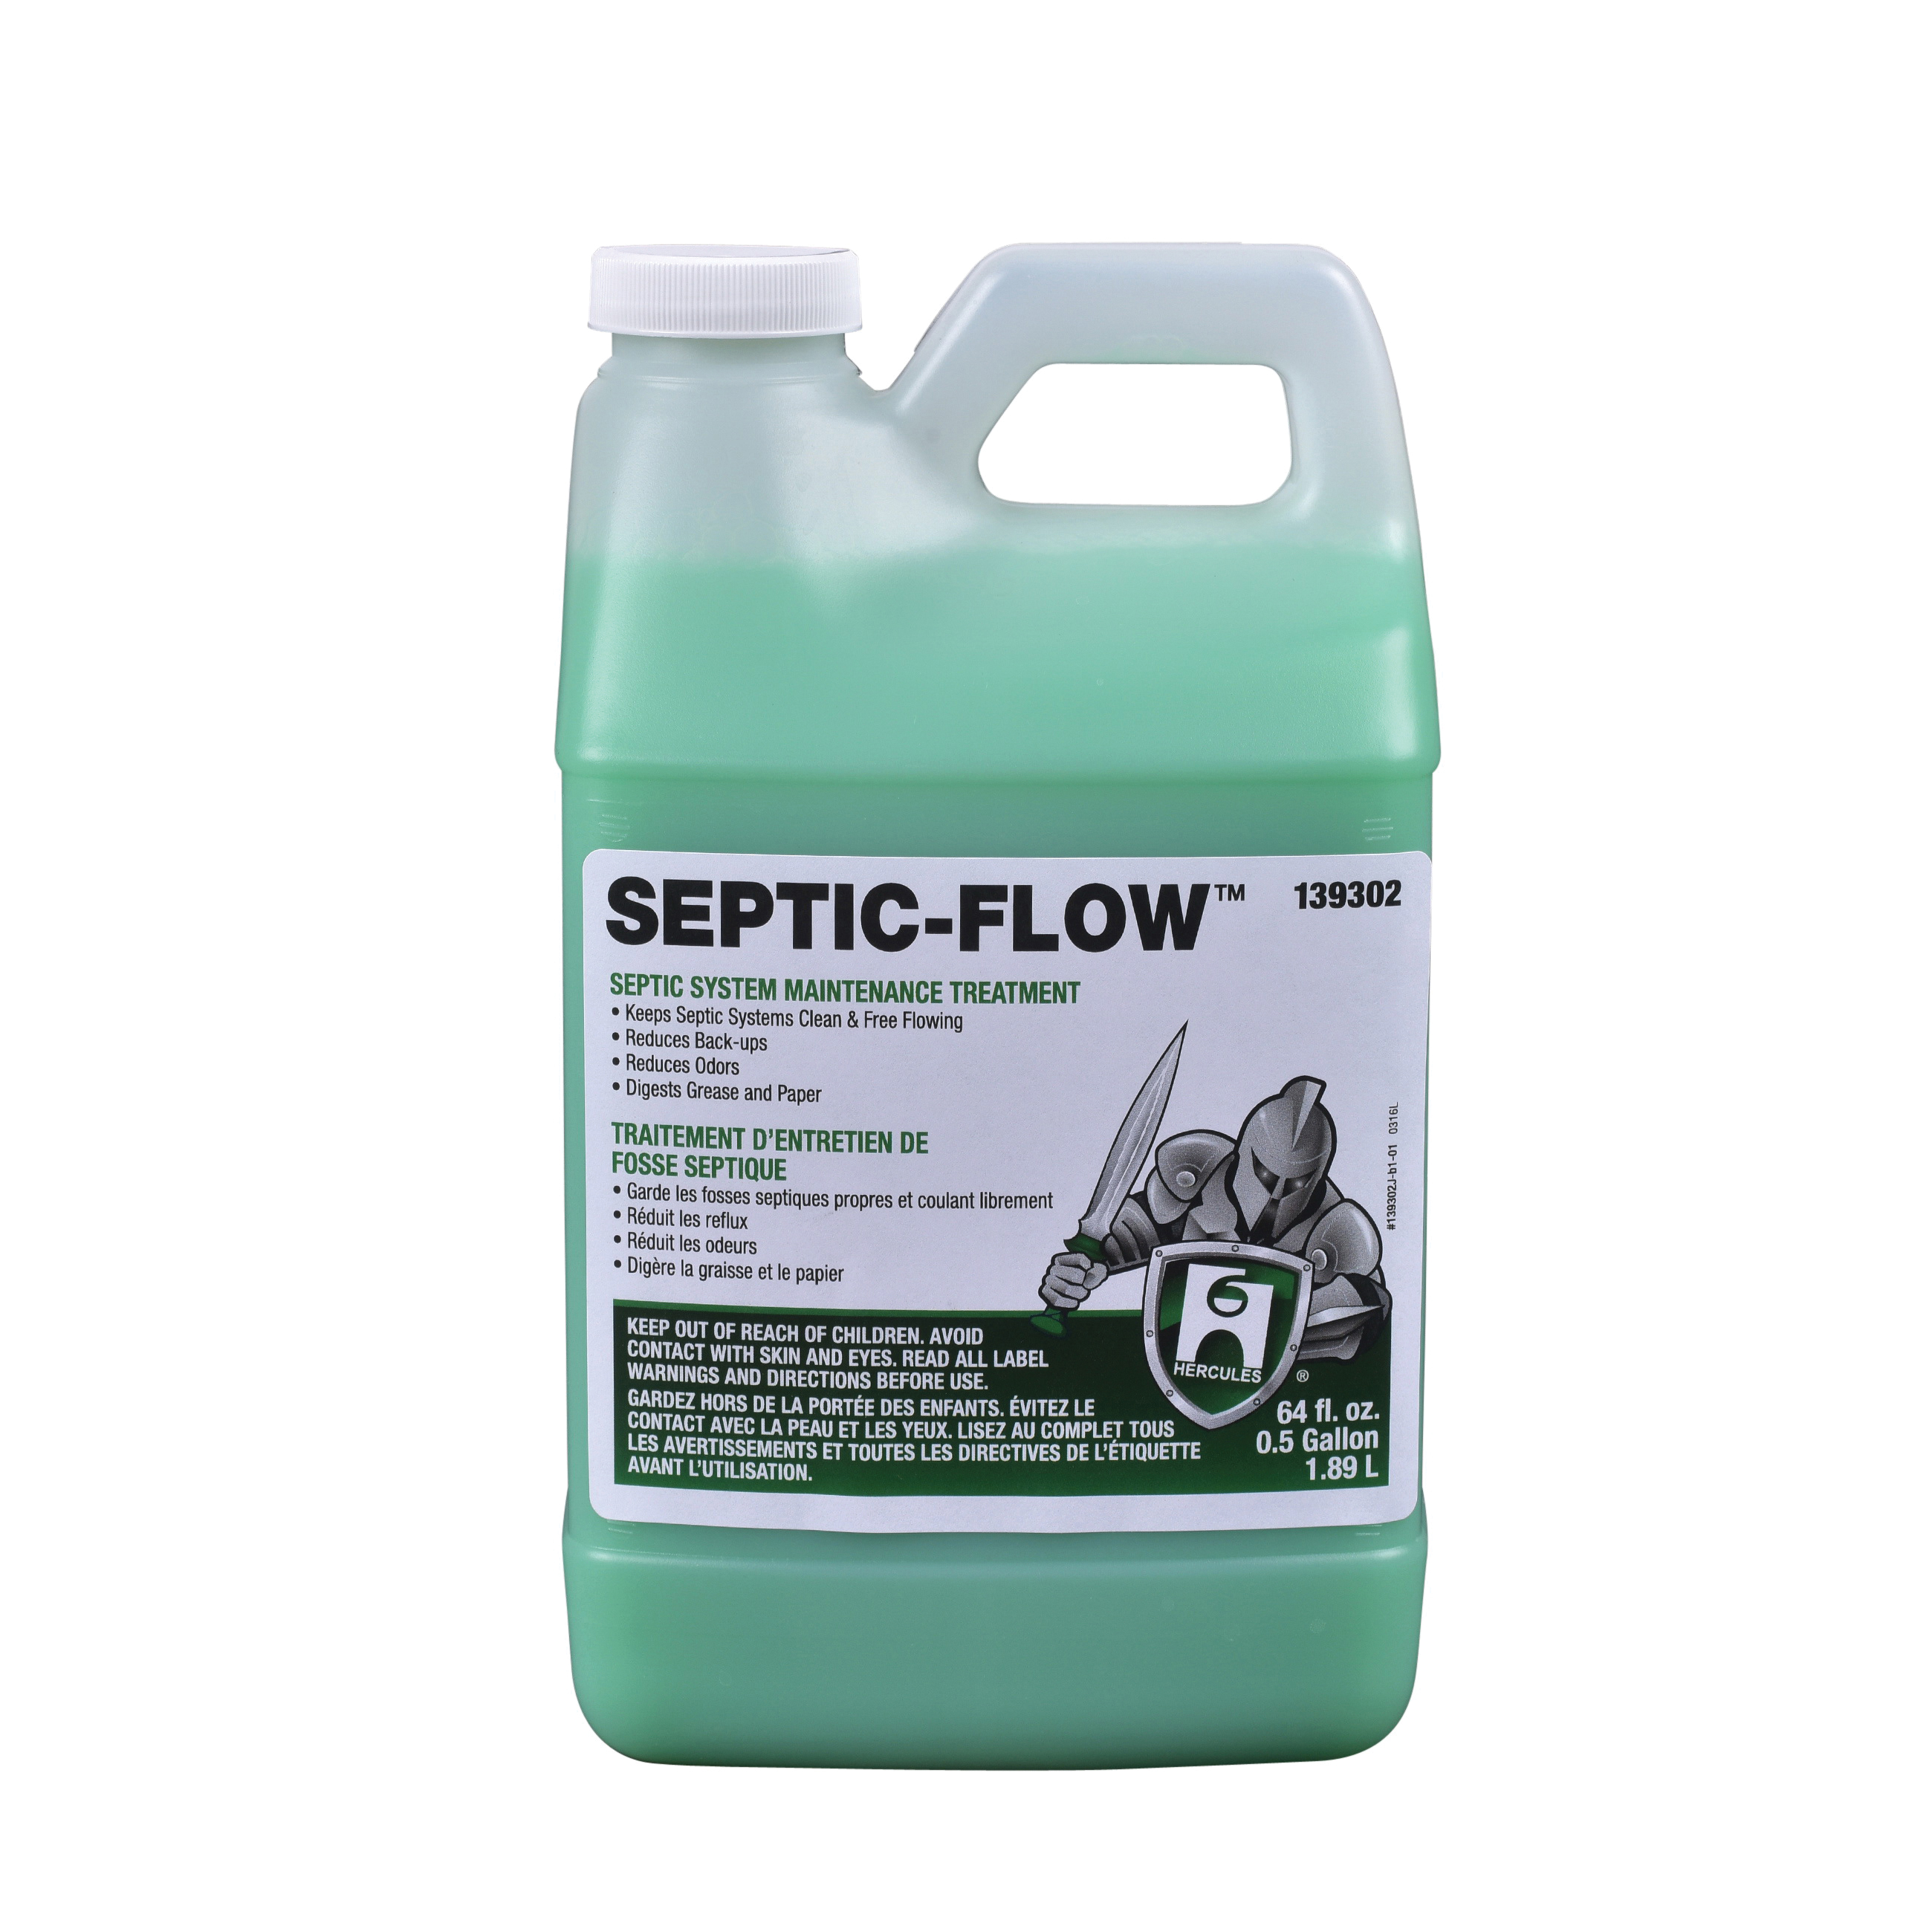 Hercules® Septic-Flow™ 139302 Maintenance Treatment Cleaner, 64 oz, Liquid Form, Green, Mild Odor/Scent